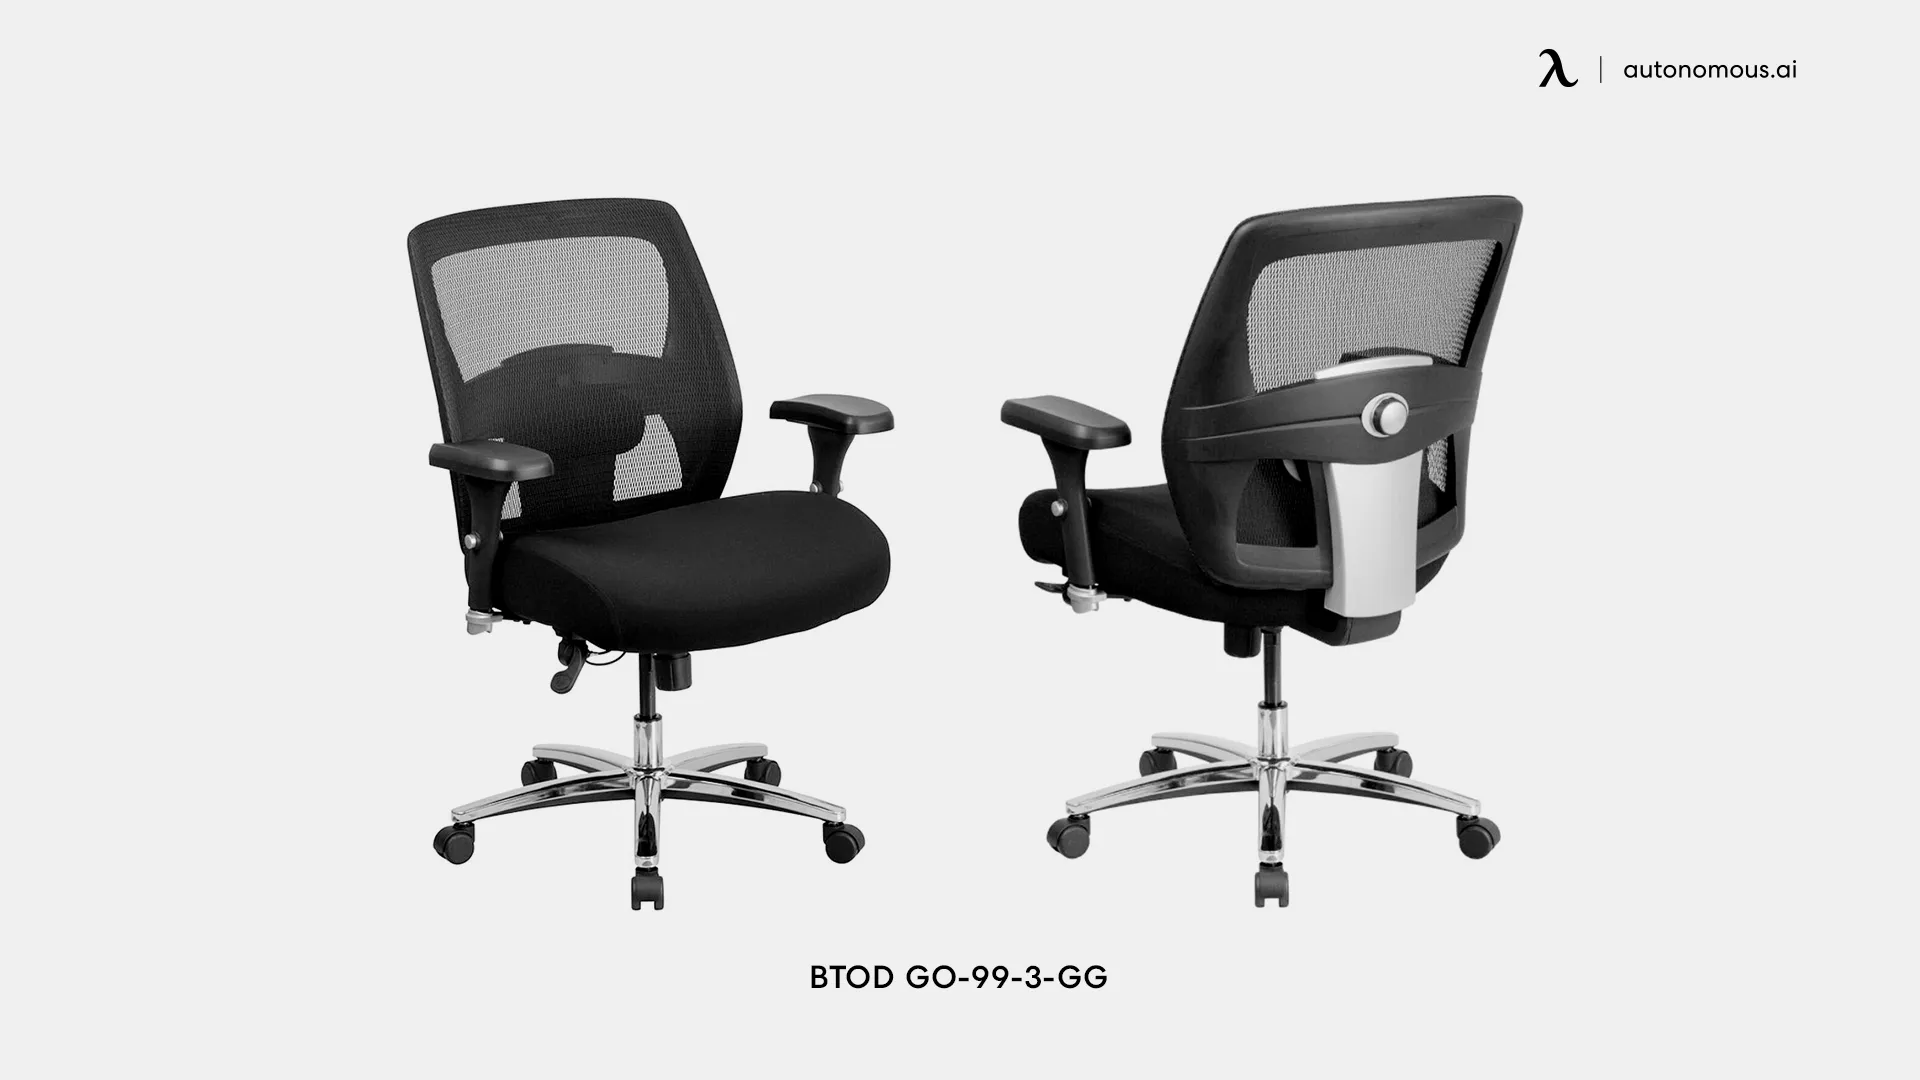 BTOD GO-99-3-GG mesh office chair